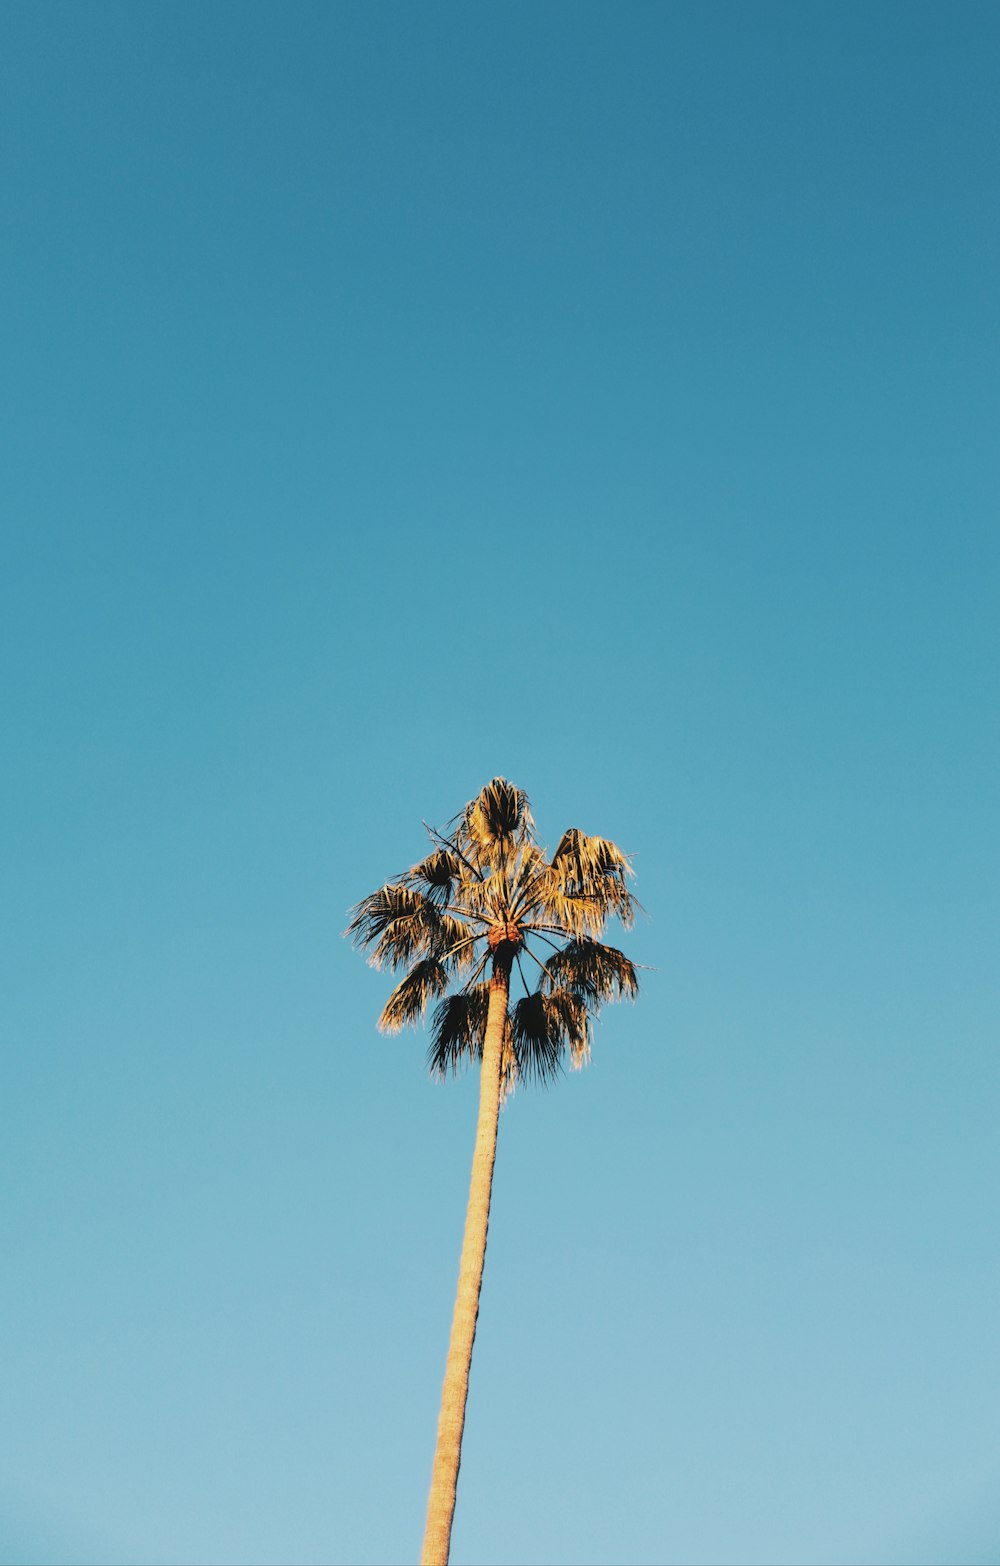 a tall palm tree against a blue sky